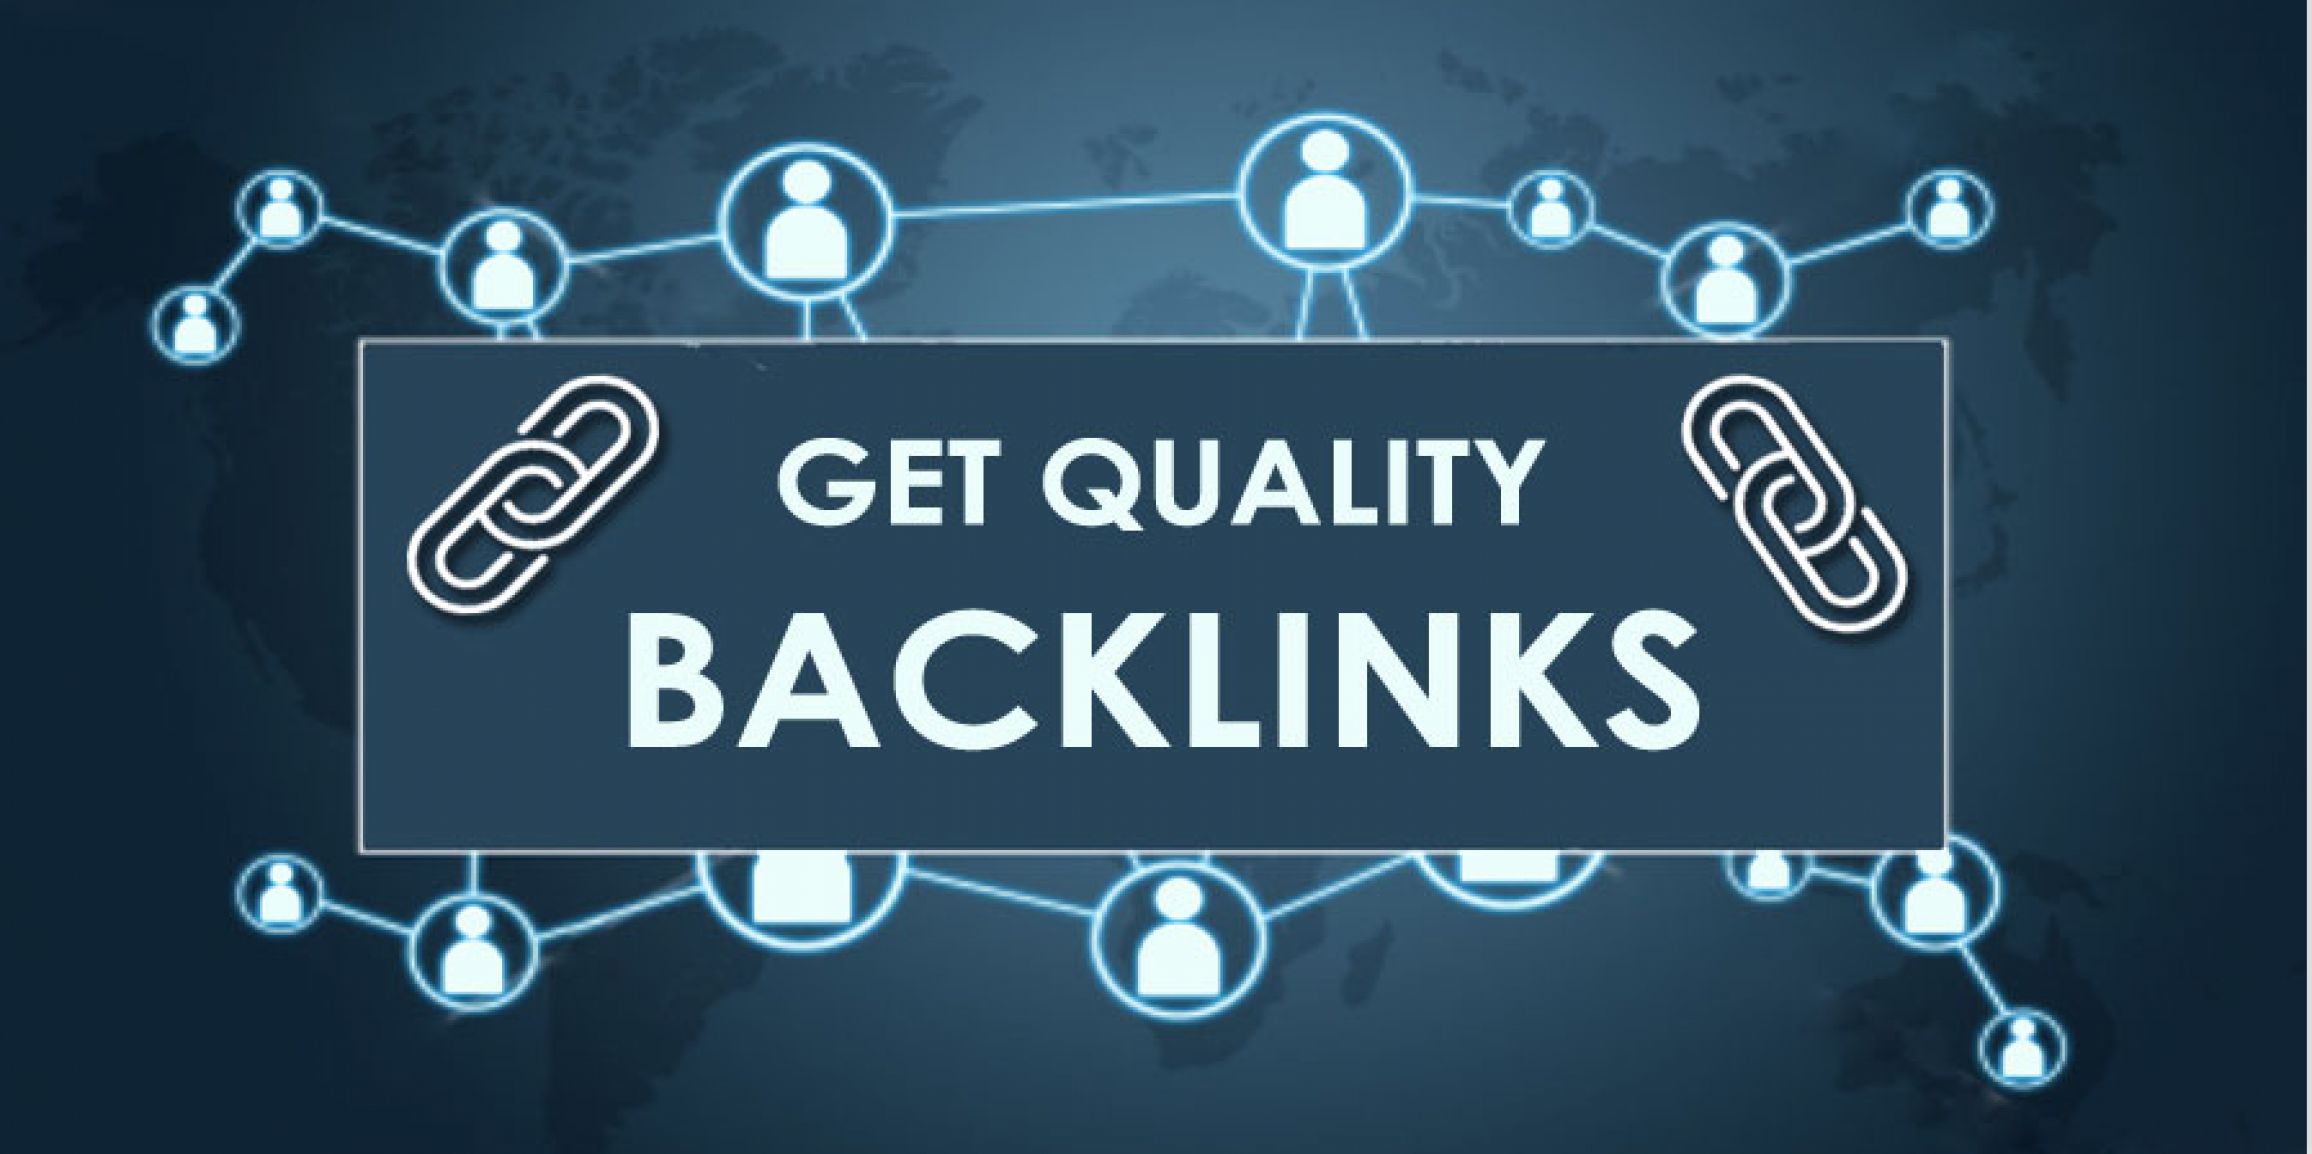 Building Backlinks through Content